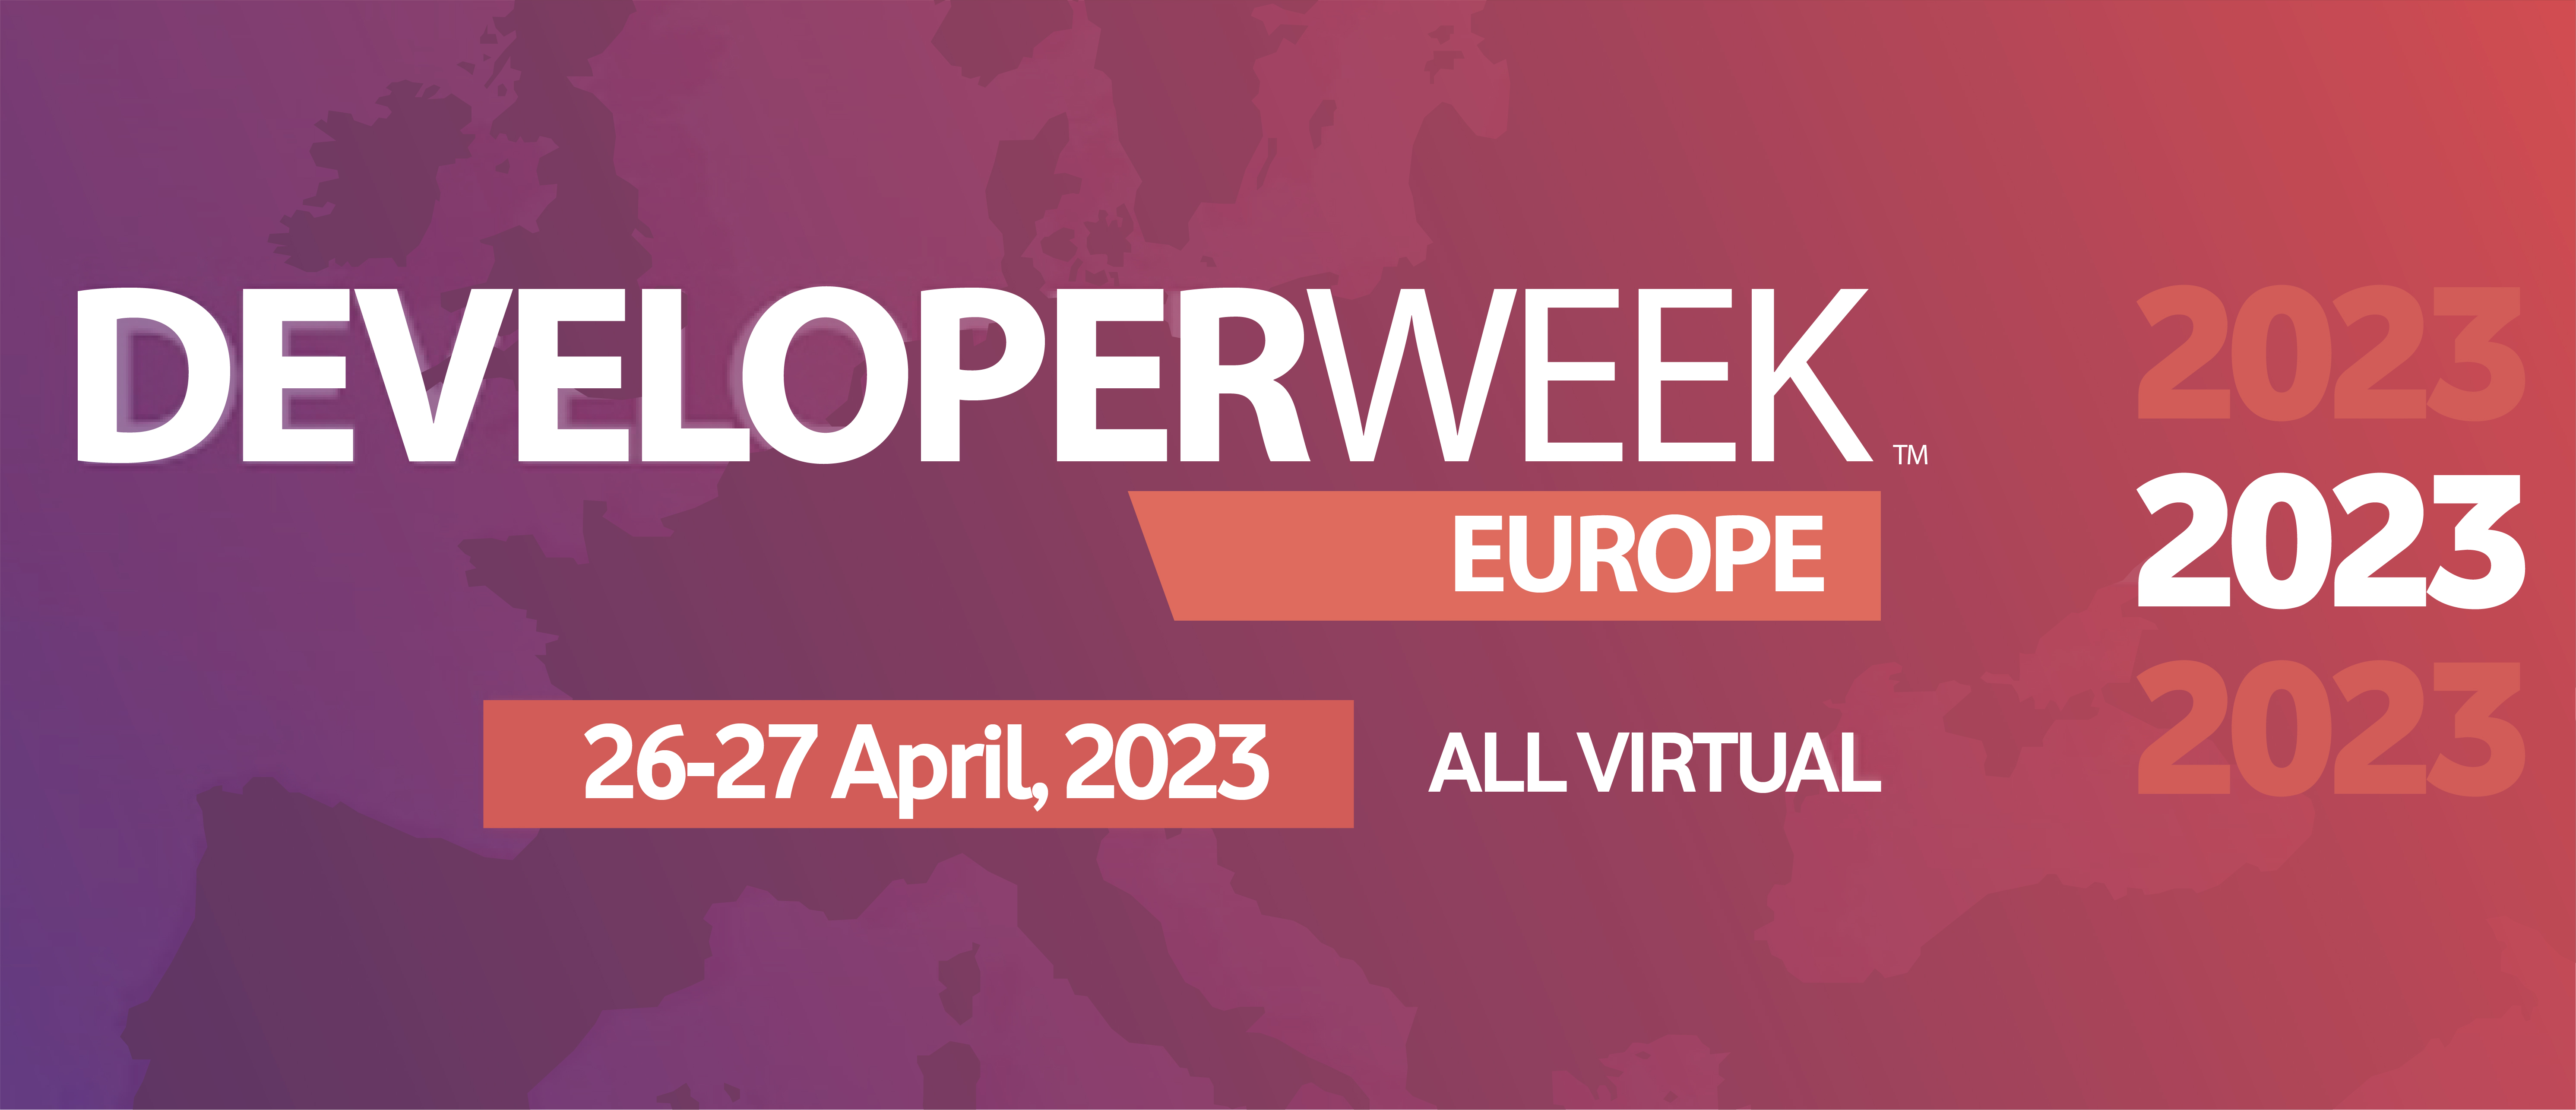 DeveloperWeek Europe 2023